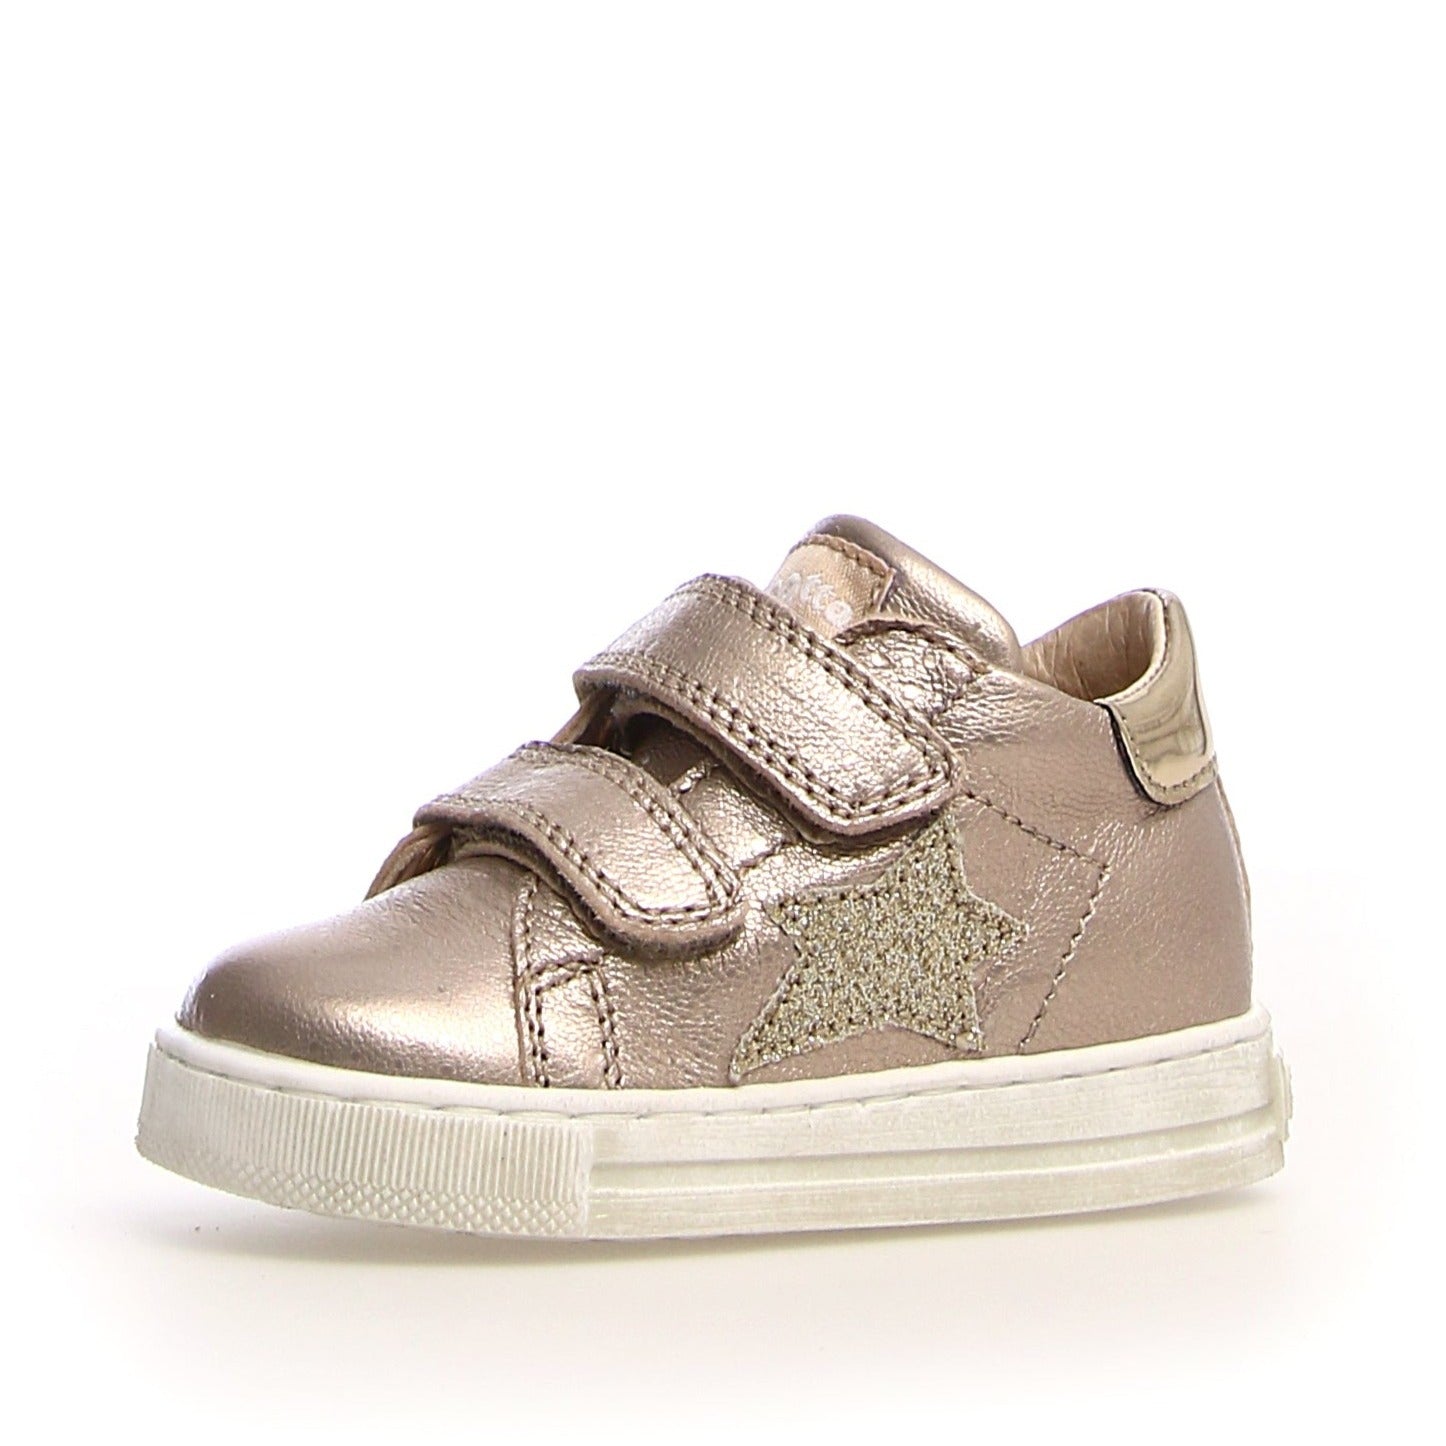 Naturino Falcotto Girl's Sasha Vl Mirrored Fashion Sneakers, Platinum ...